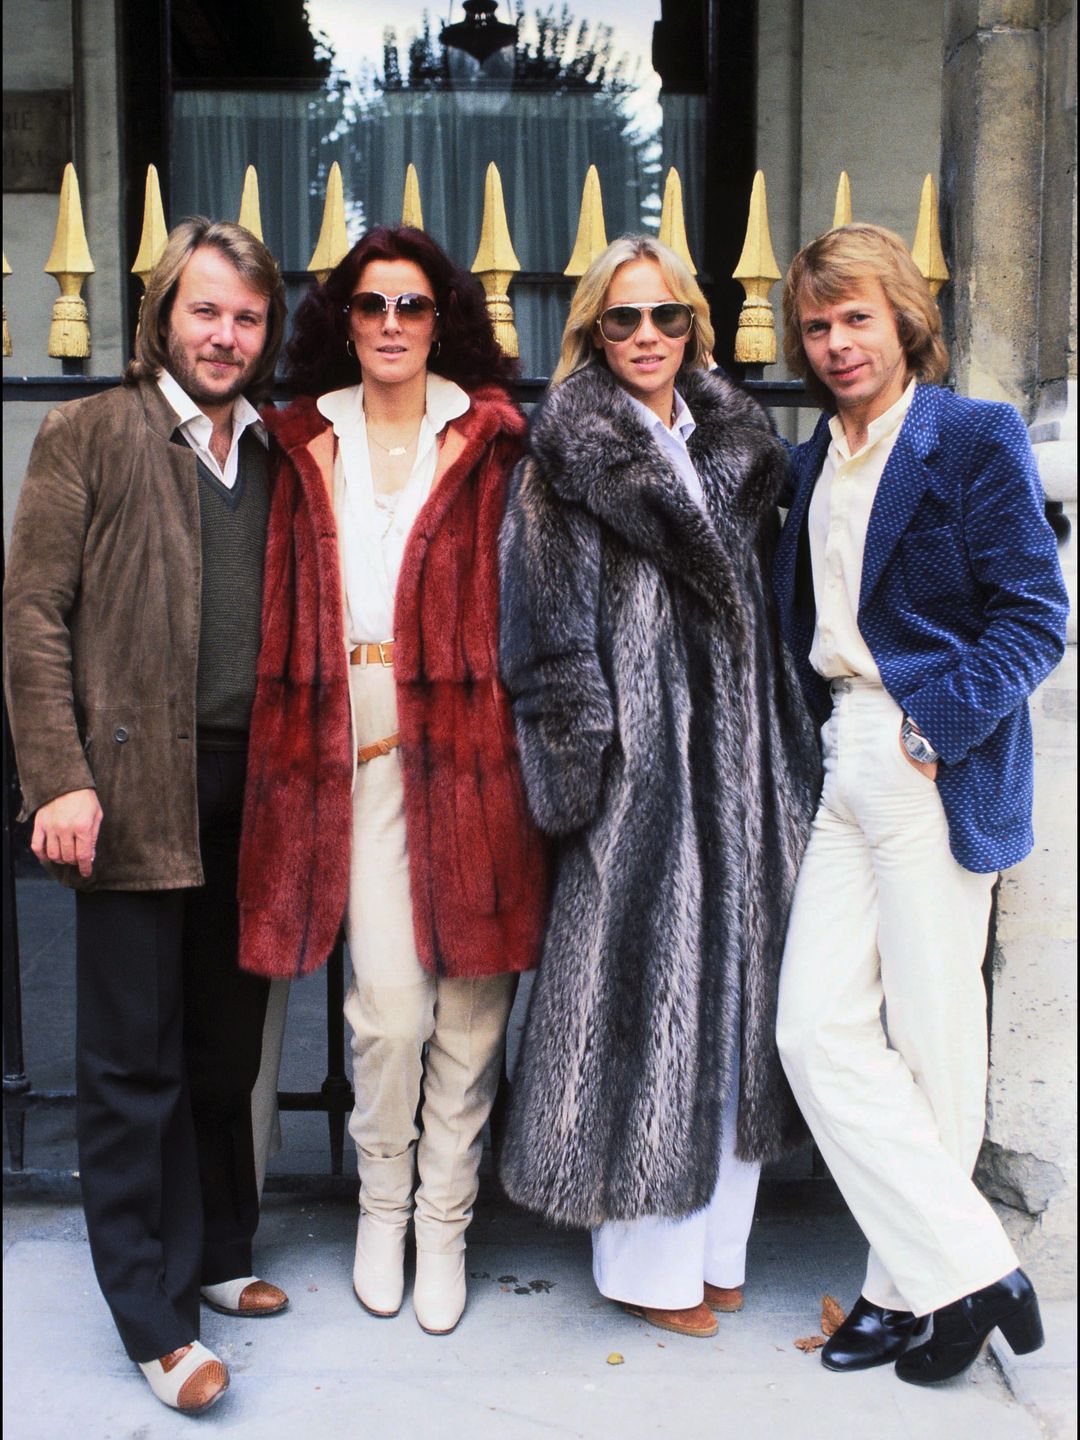 Anni-Frid Lyngstad, Benny Anderson, Agnetha Faltskog, Bjorn Ulvaeus in Paris, France in 1979